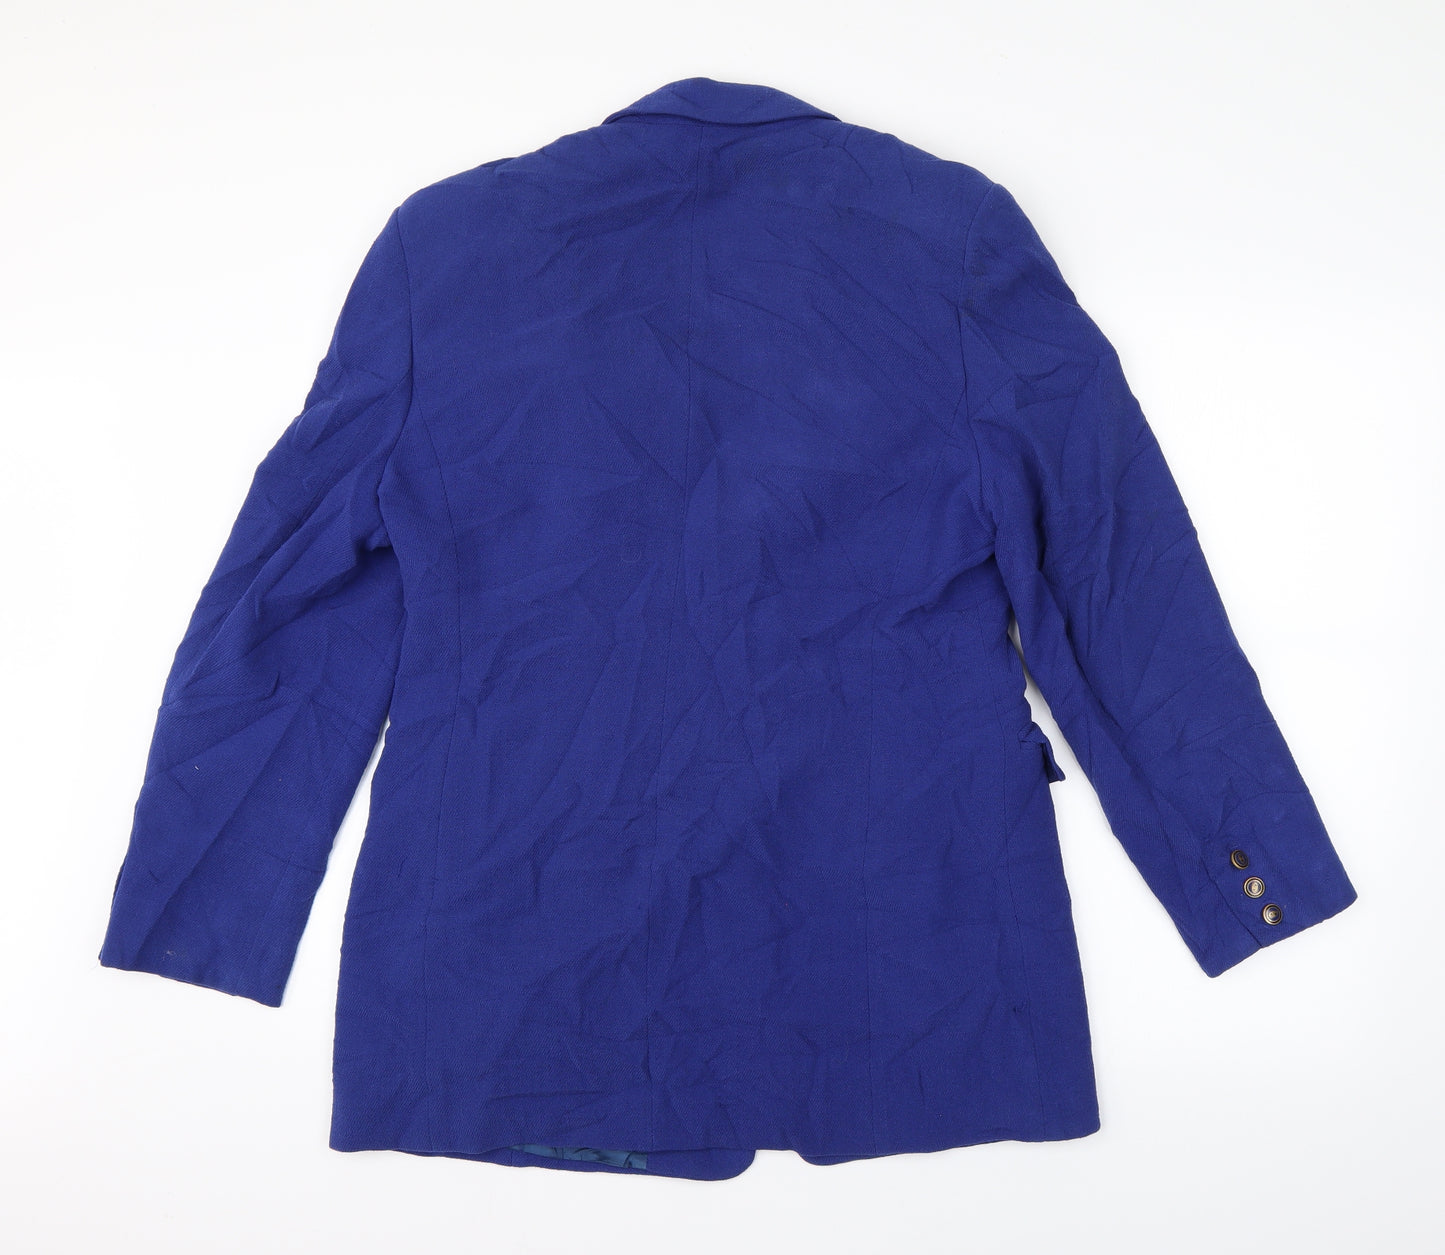 Jobis Womens Blue   Jacket Suit Jacket